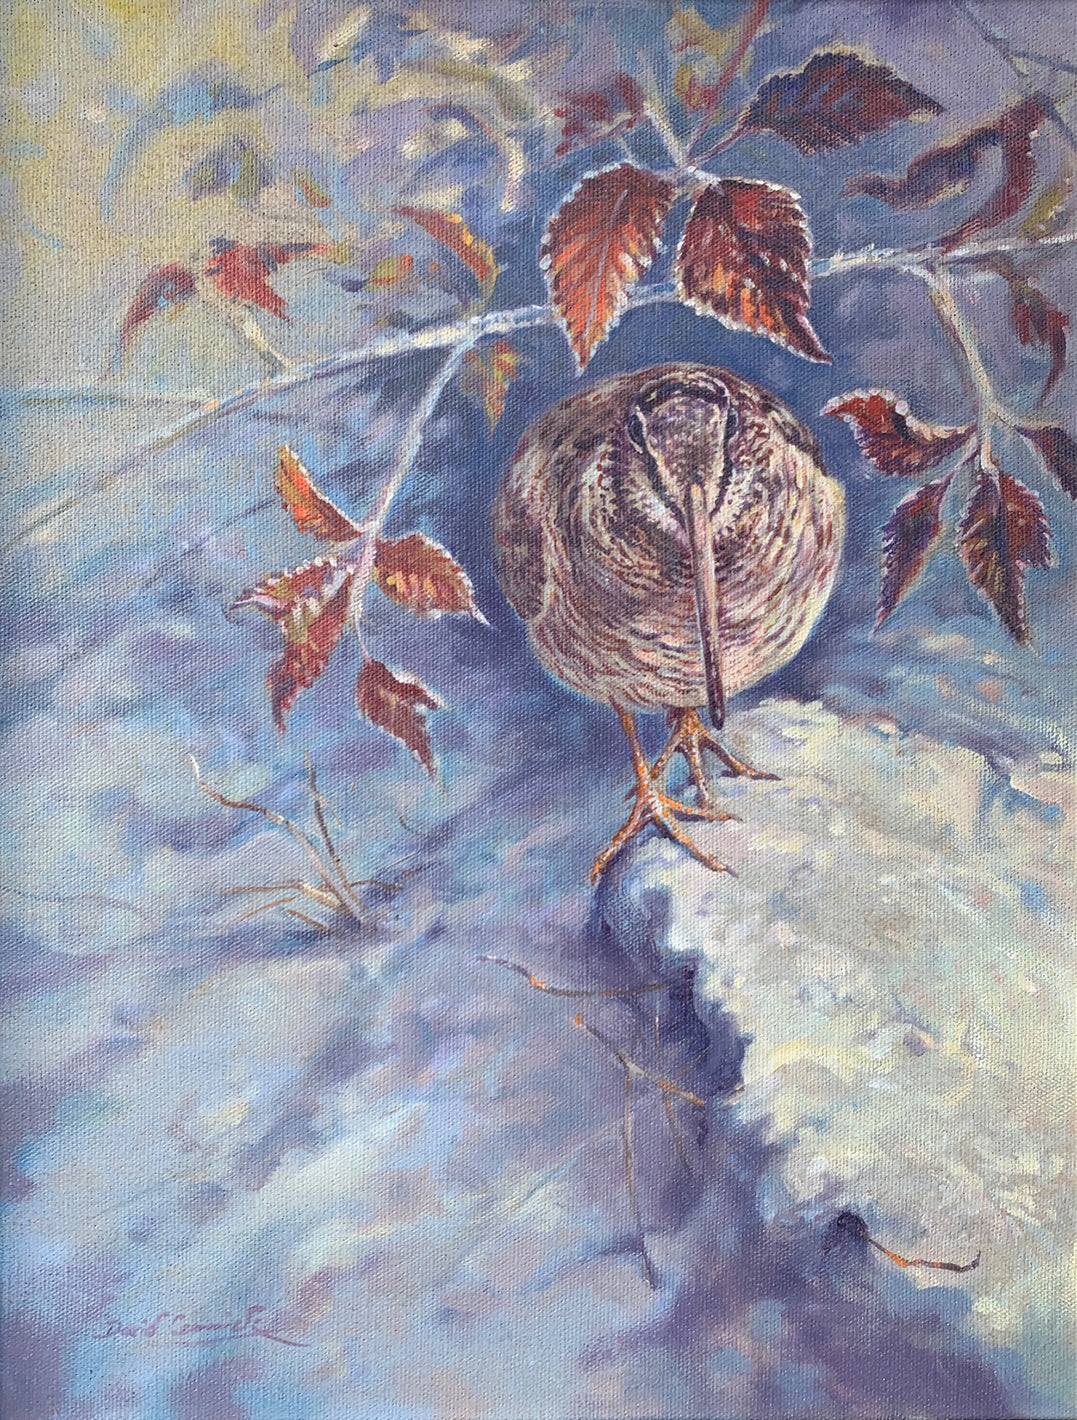 'Frosty Morning’ - Original Oil on Canvas by David Cemmick - 44 x 34cm